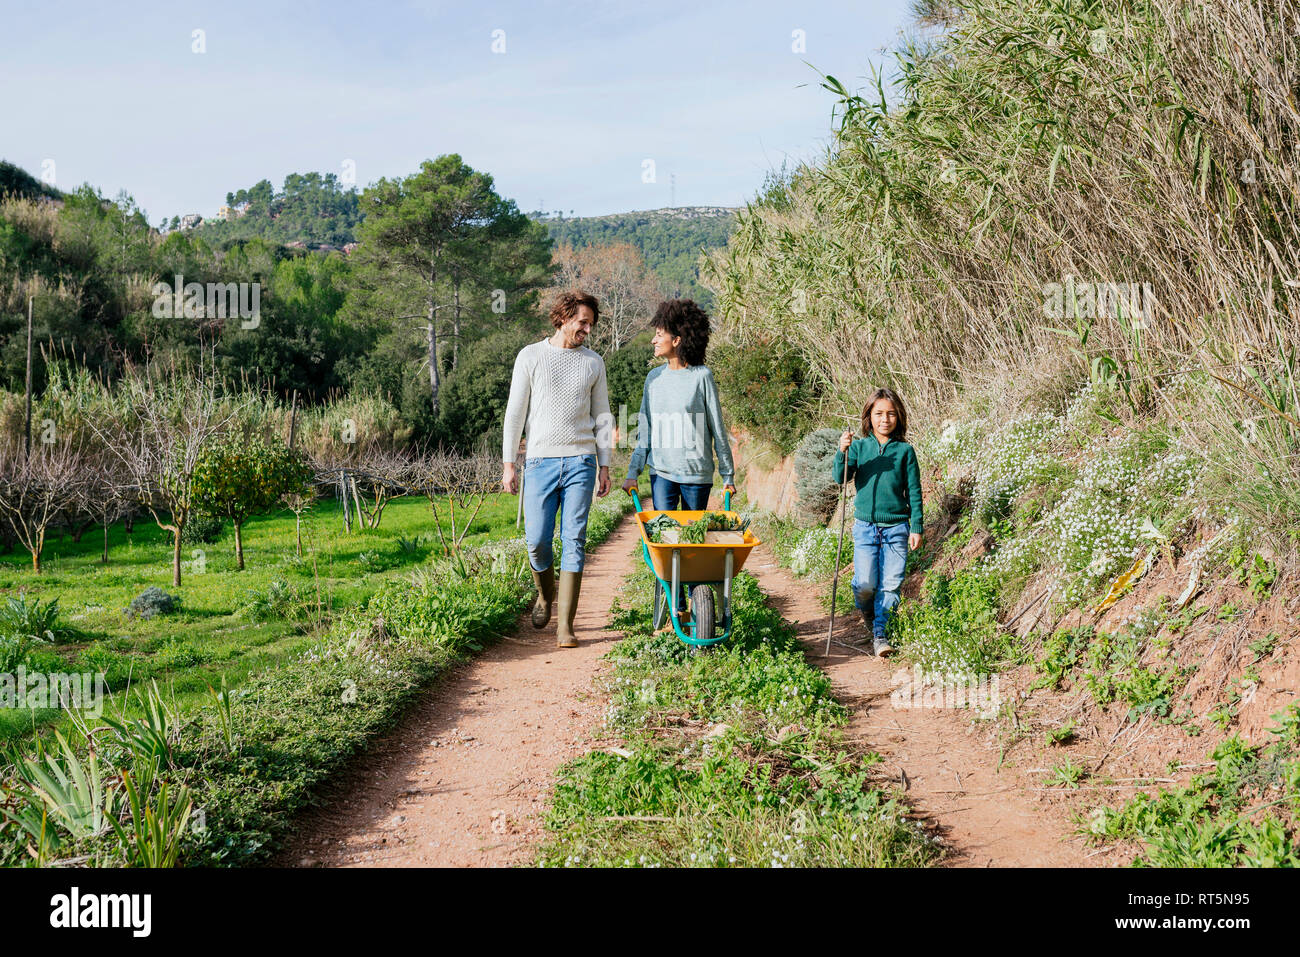 Family walking on a dirt track, pushing wheelbarrow, full of fresh vegetables Stock Photo